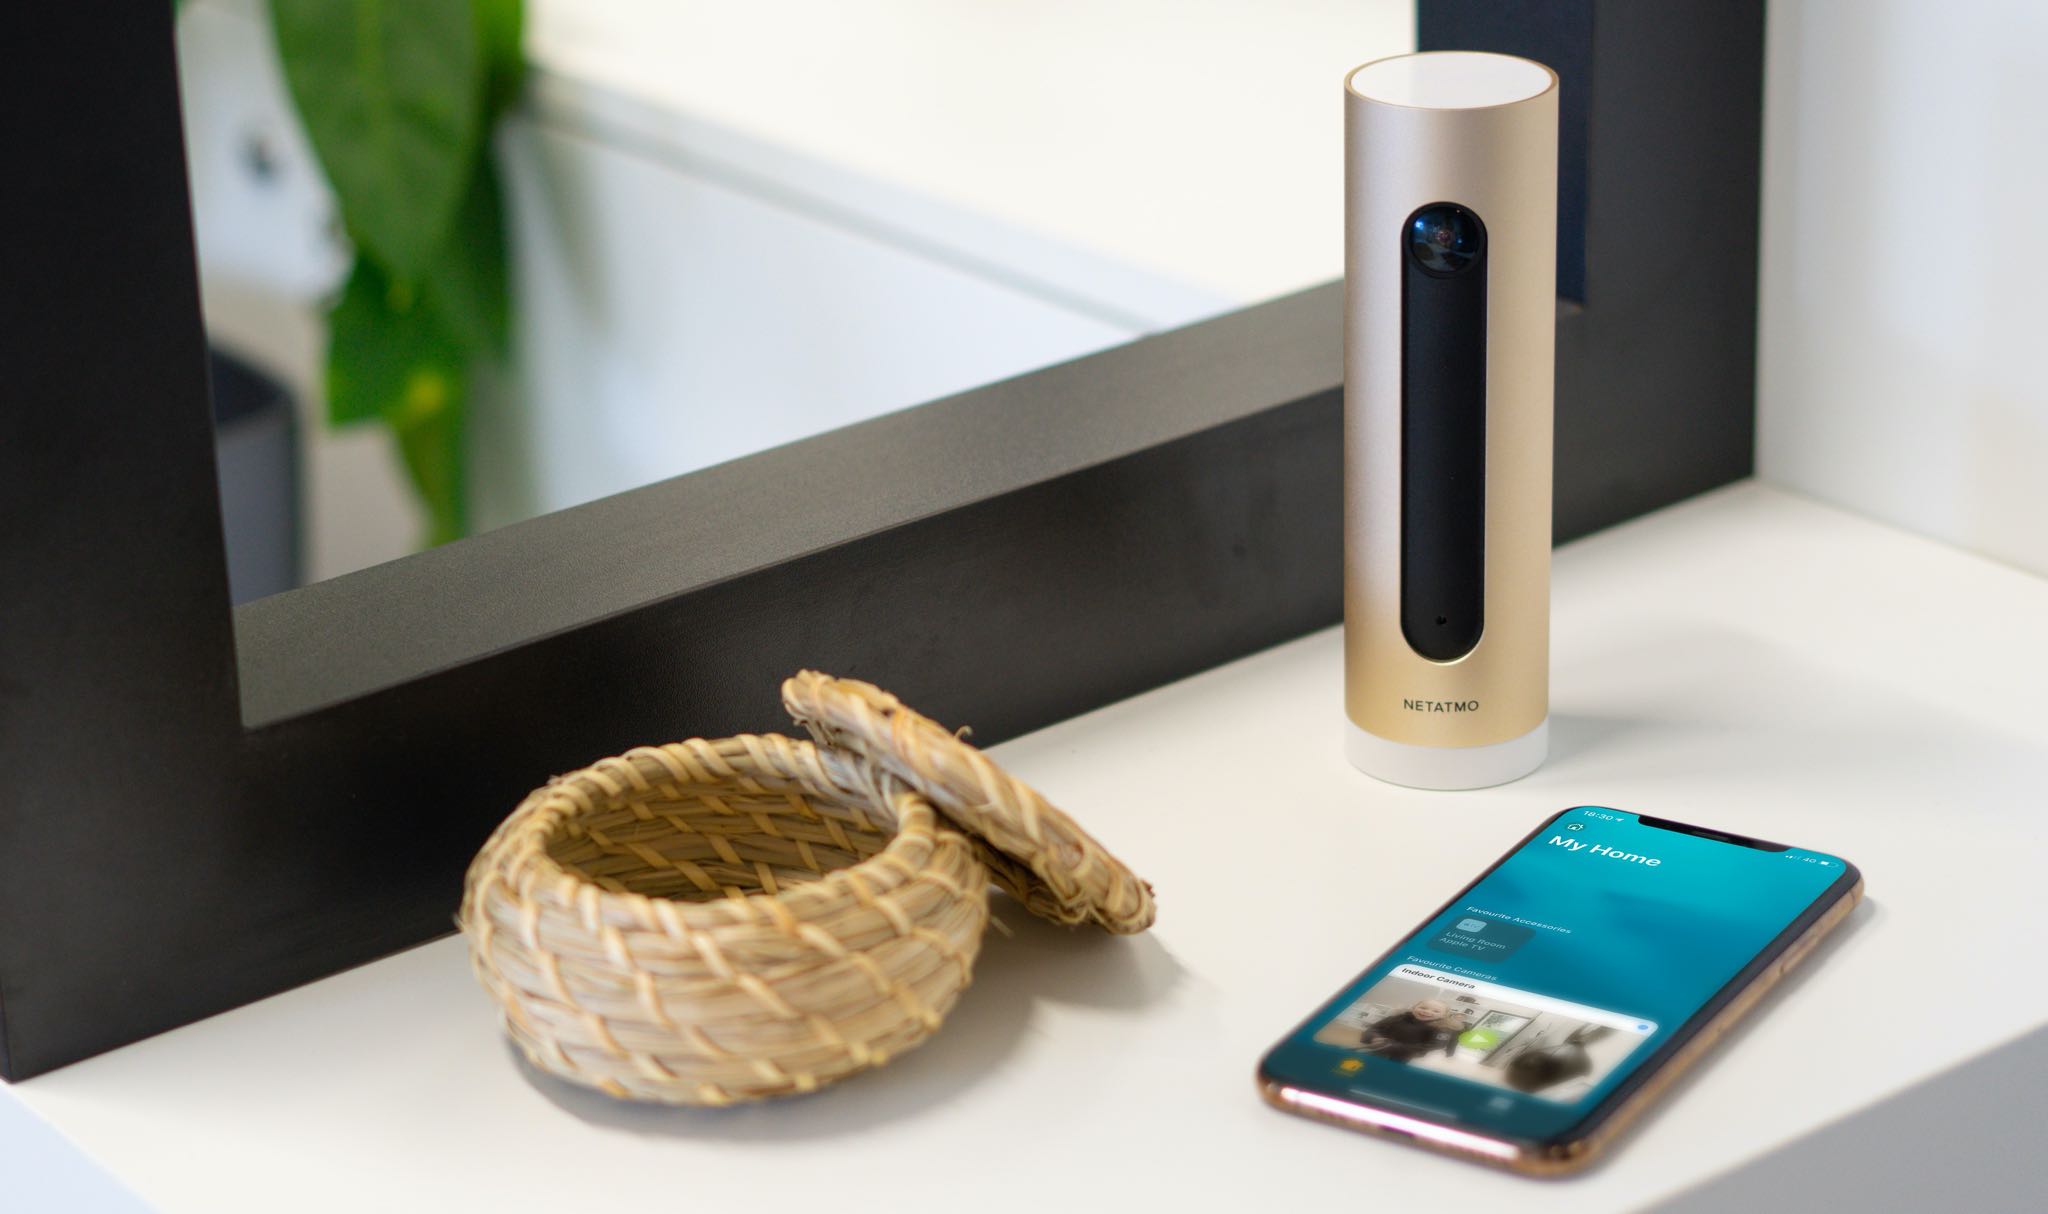 Netatmo's Smart Indoor Camera now supports Apple's HomeKit Secure